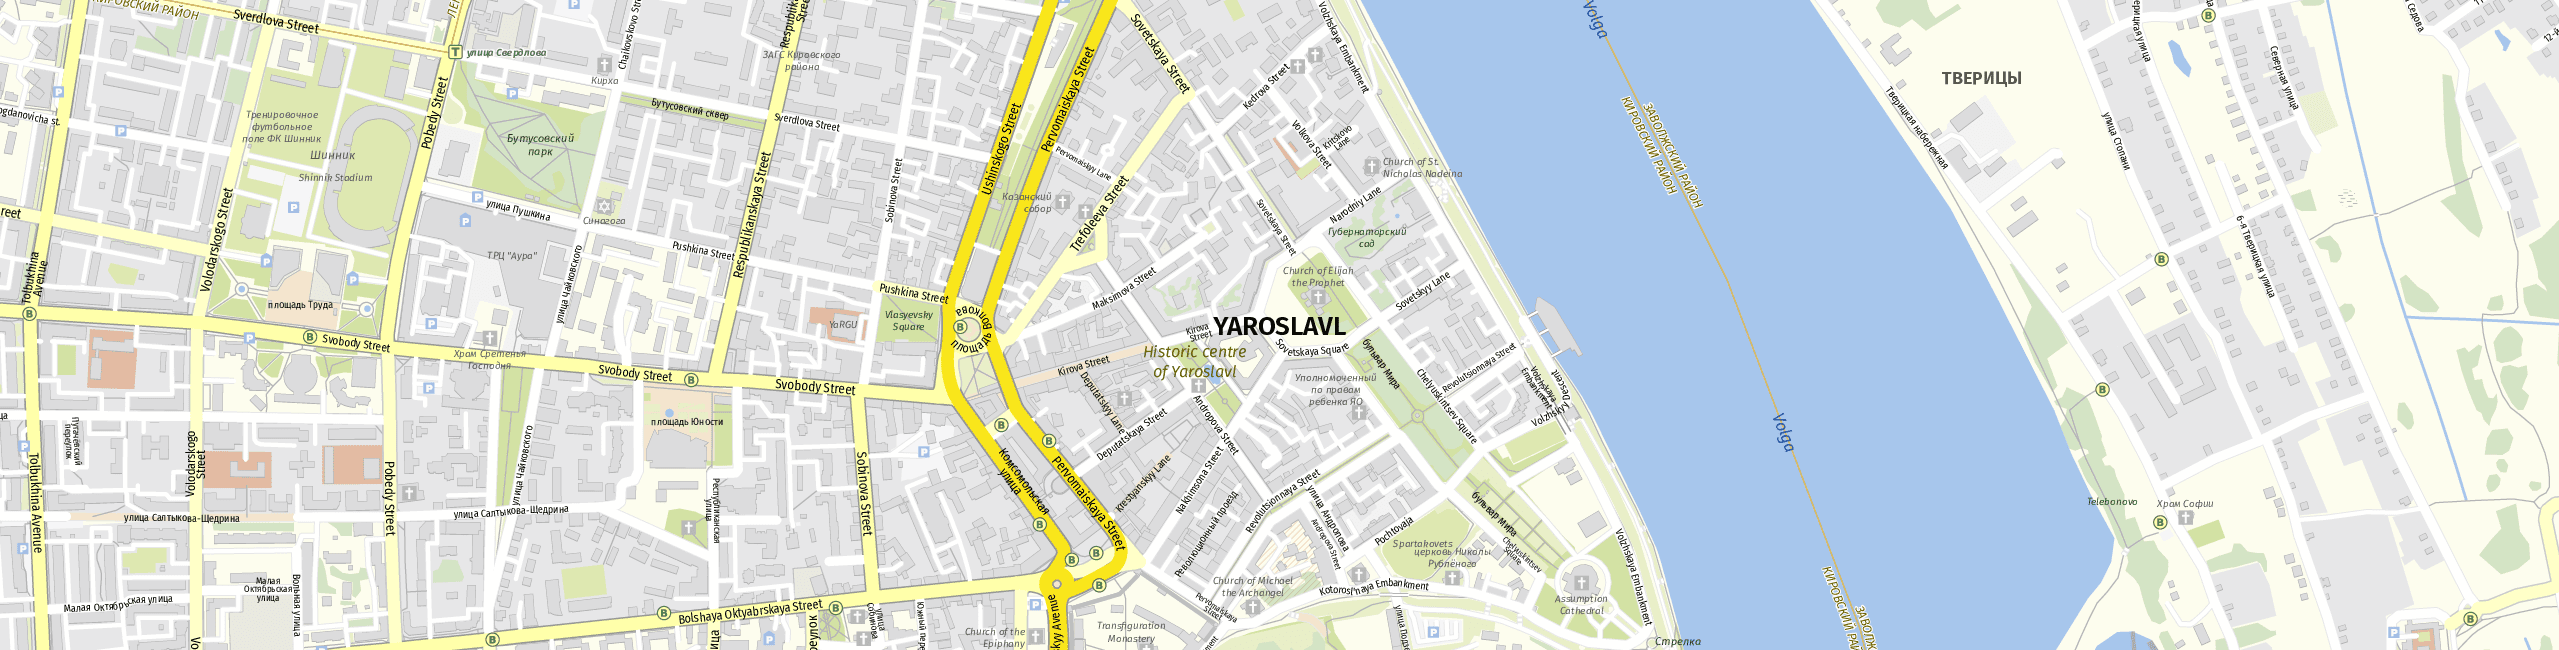 Stadtplan Yaroslavl zum Downloaden.